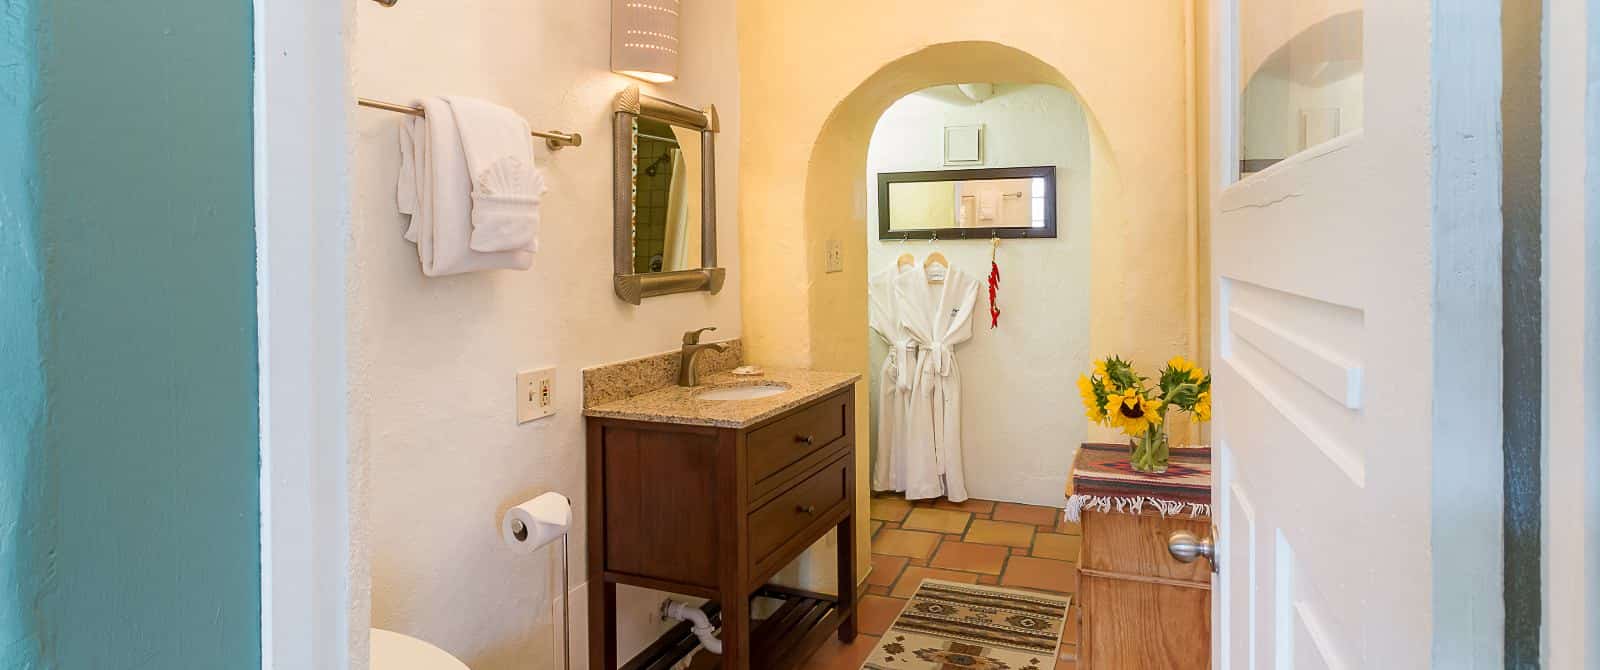 Foyer to bathroom with wooden sink vanity and dresser, wooden mirror and tile floor.